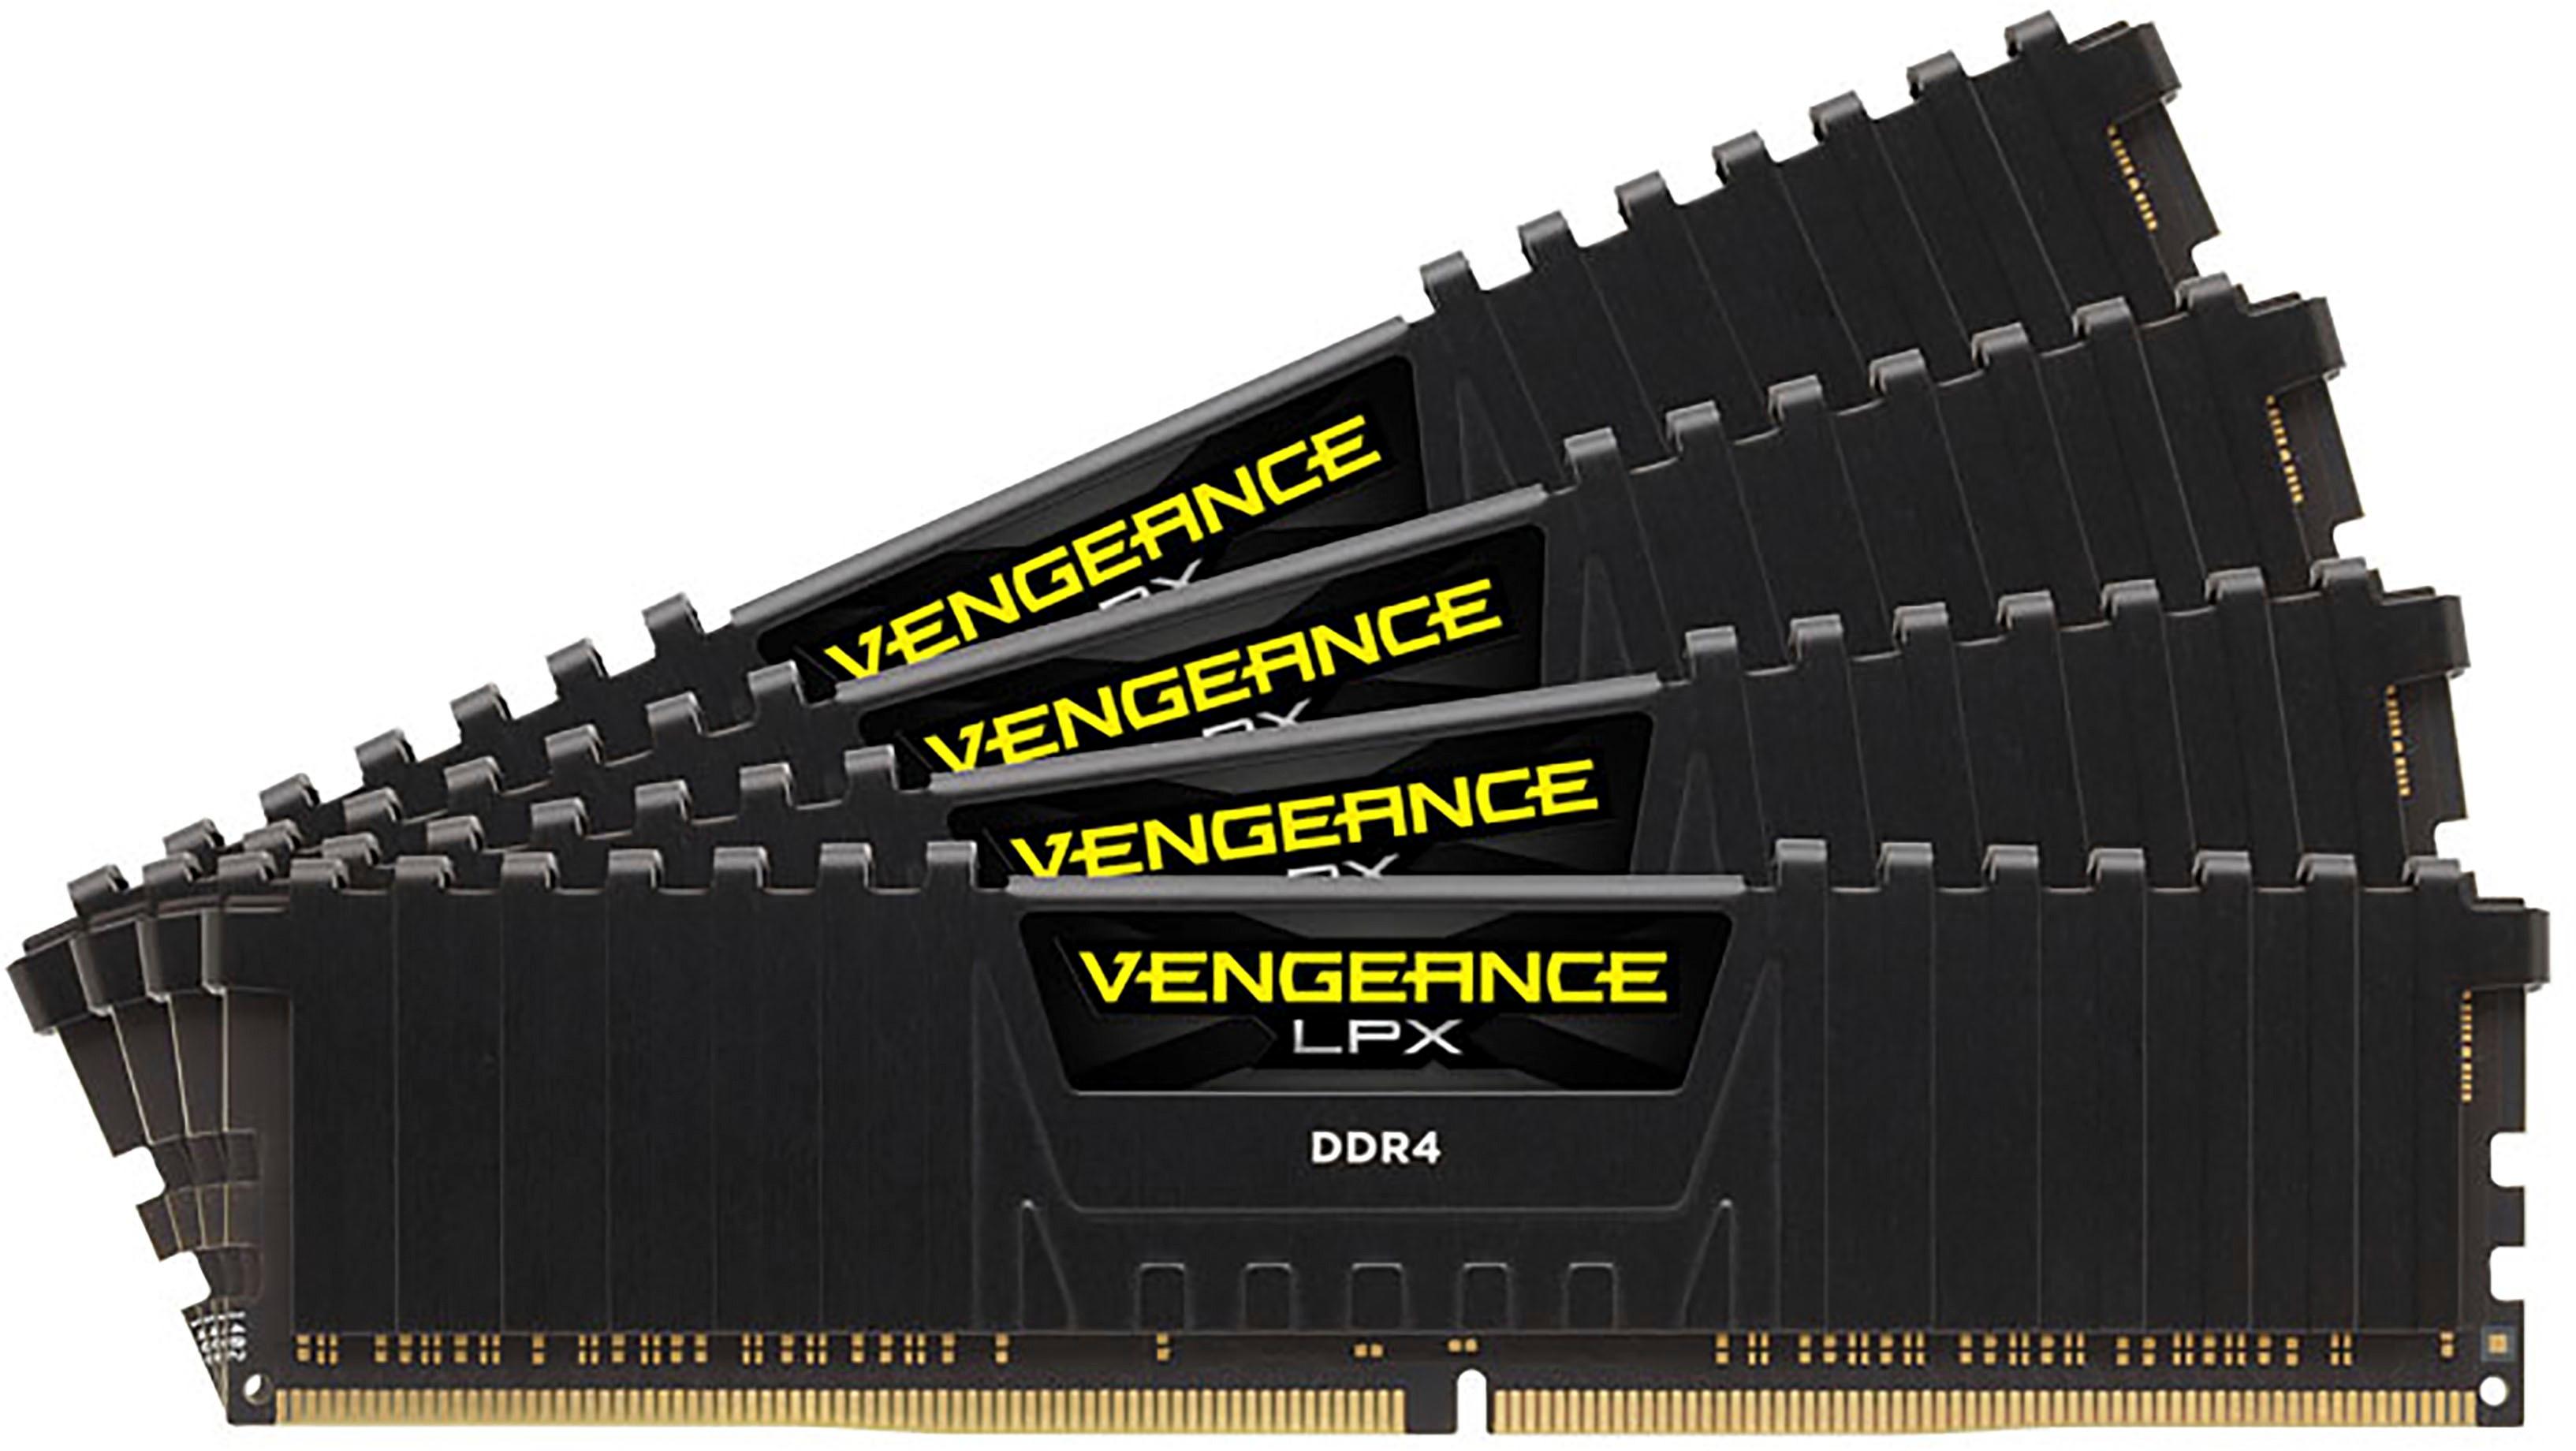 Corsair Vengeance LPX 16GB (2x8GB) DDR4 DRAM 3000MHz C15 Desktop Memory Kit  - Black (CMK16GX4M2B3000C15)